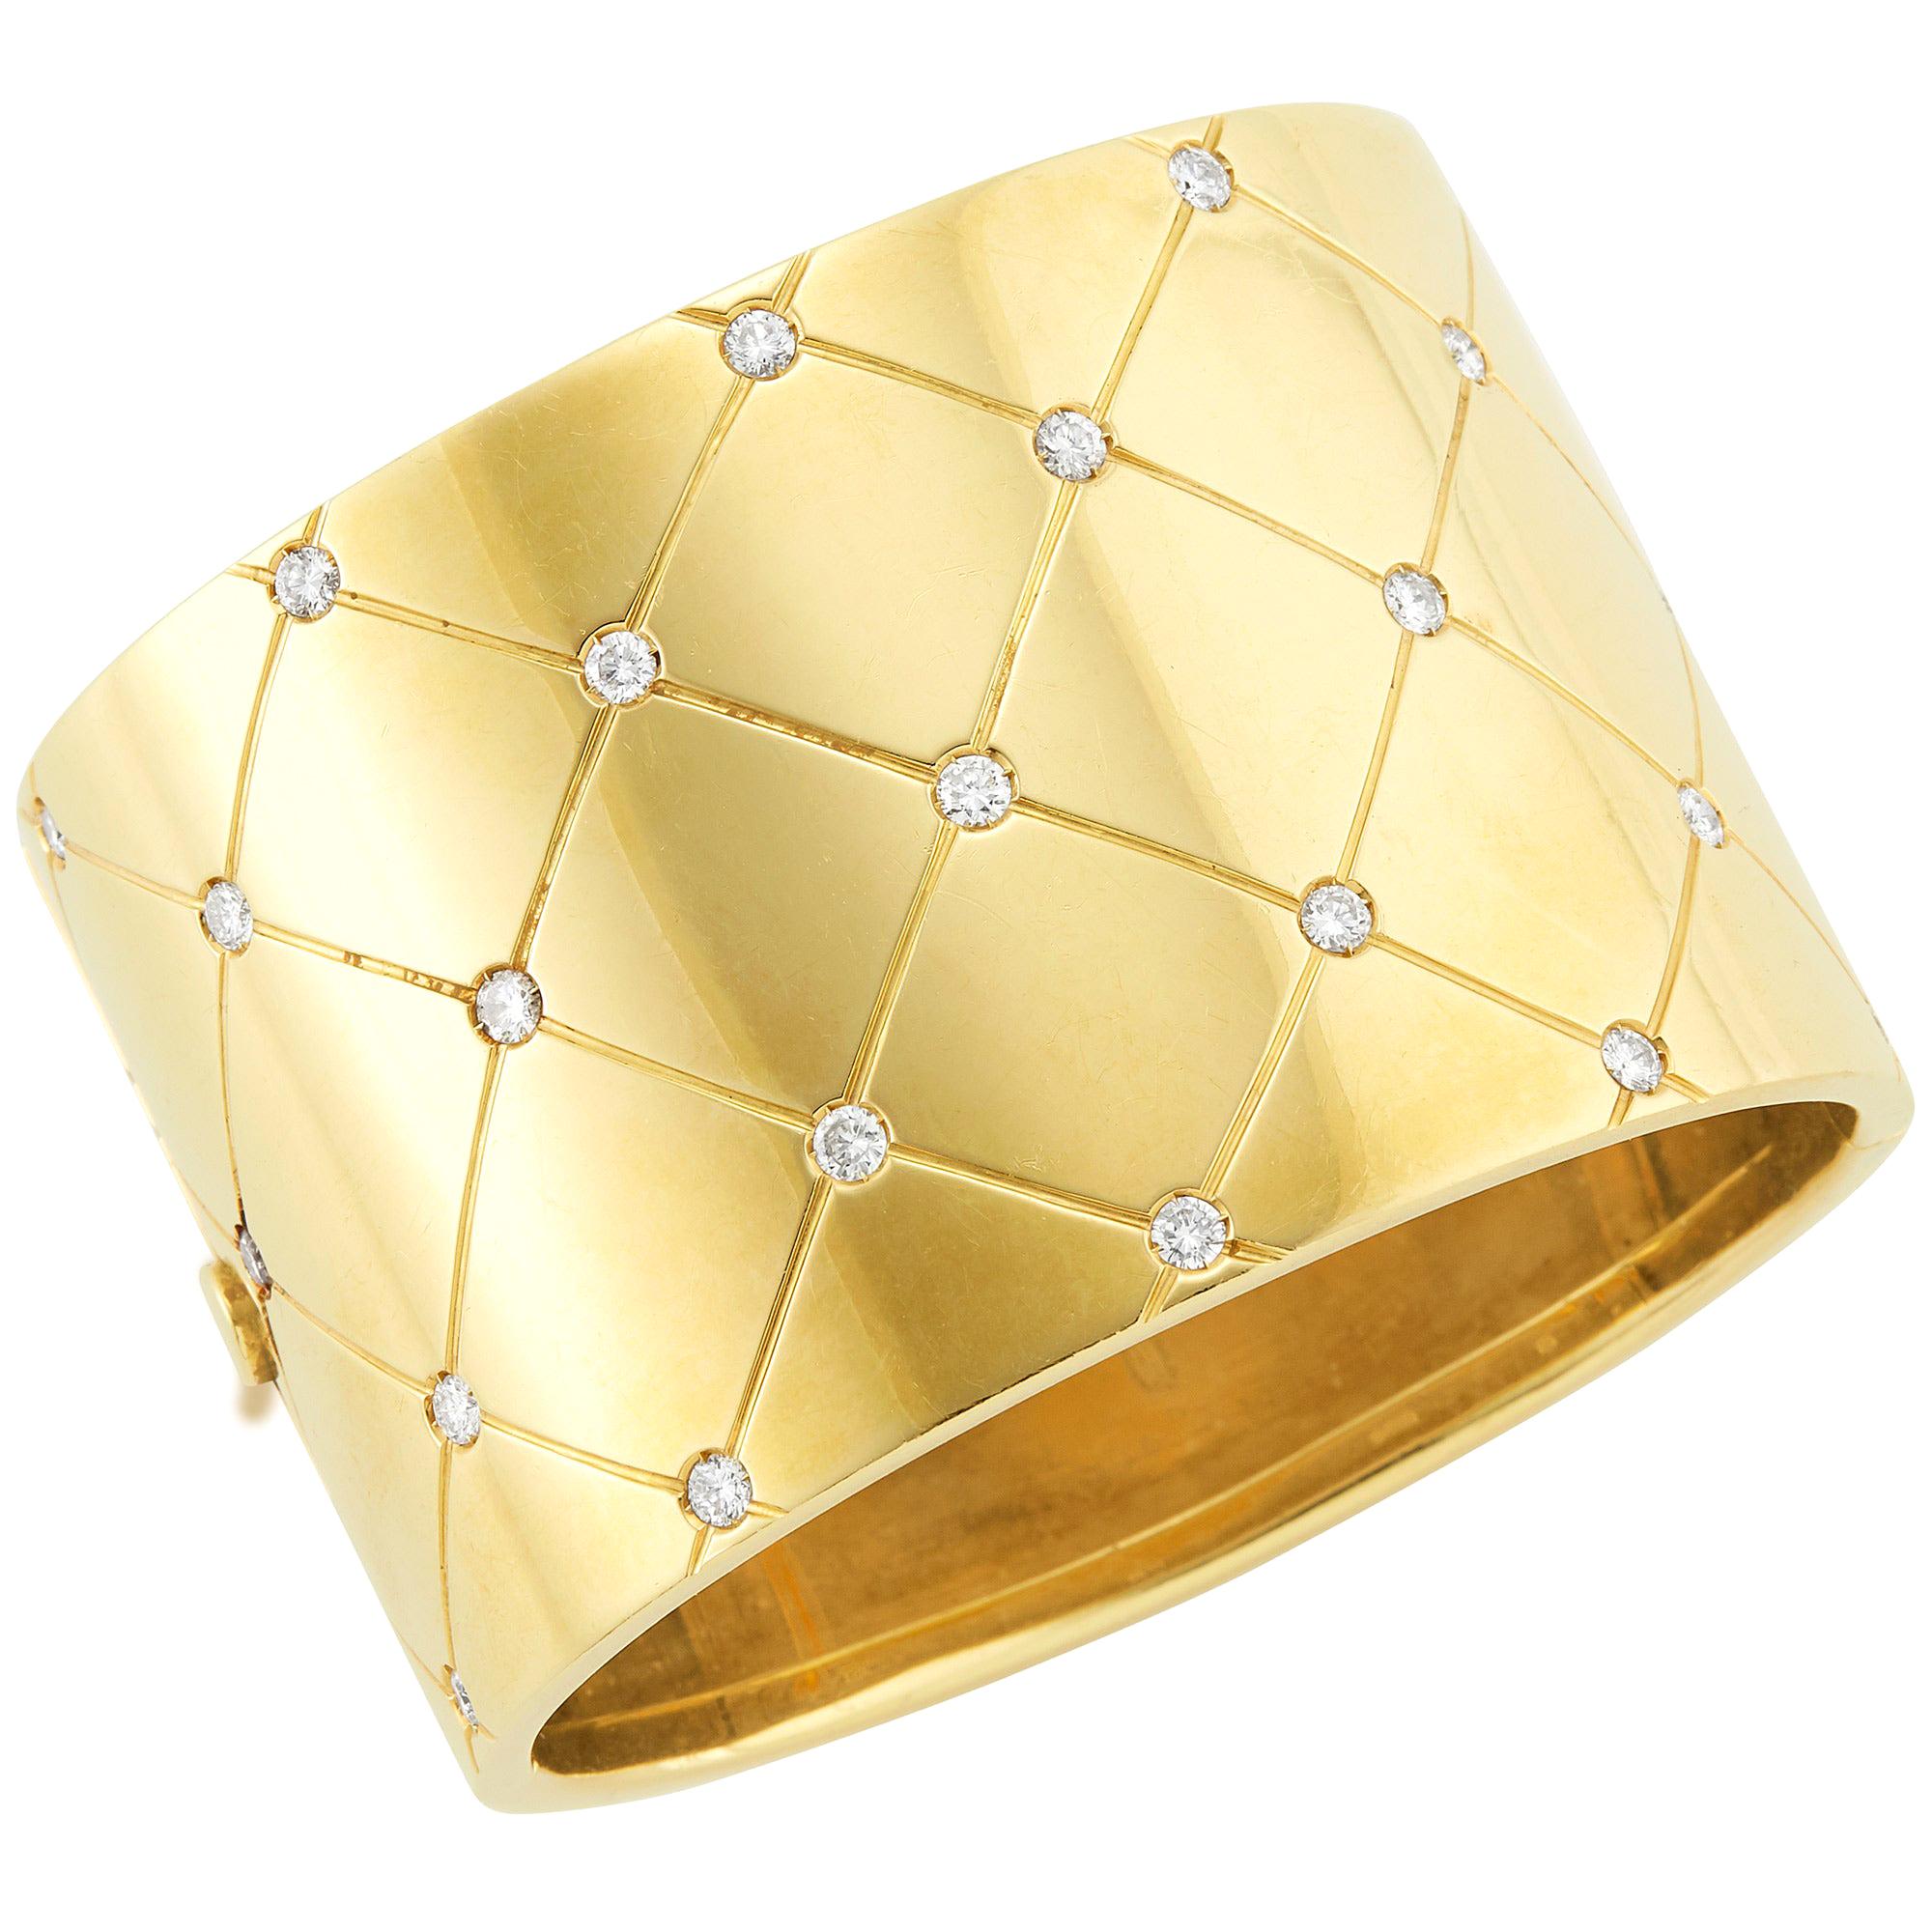 Graff Wide Gold and Diamond Cuff Bangle Bracelet